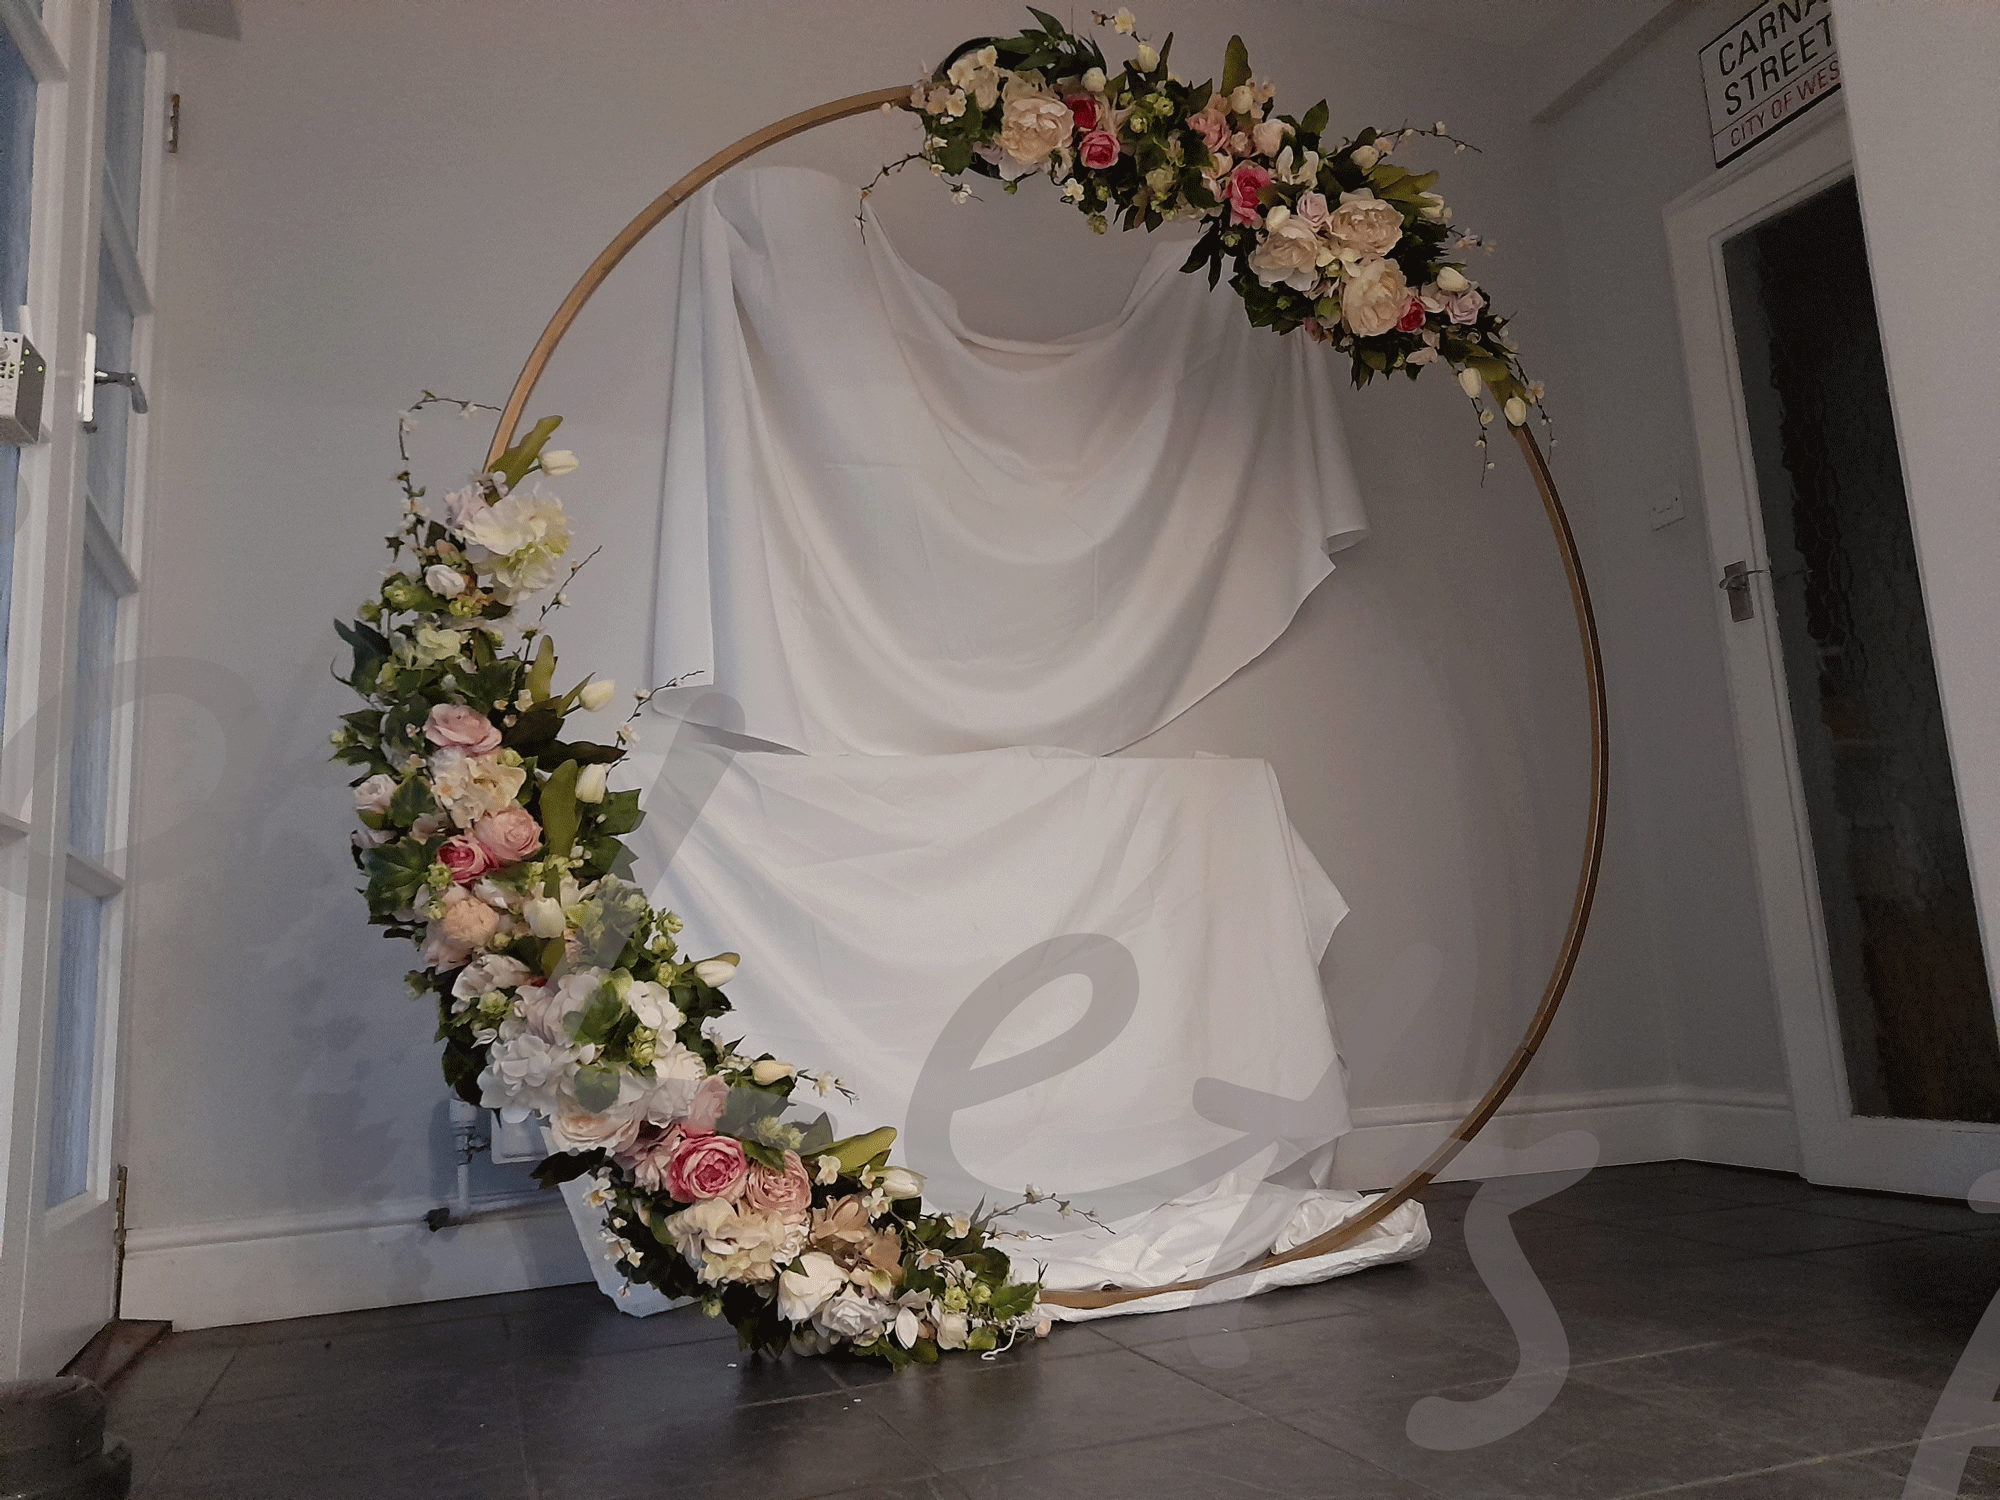 vintage-floral-hoop-decoration-hire